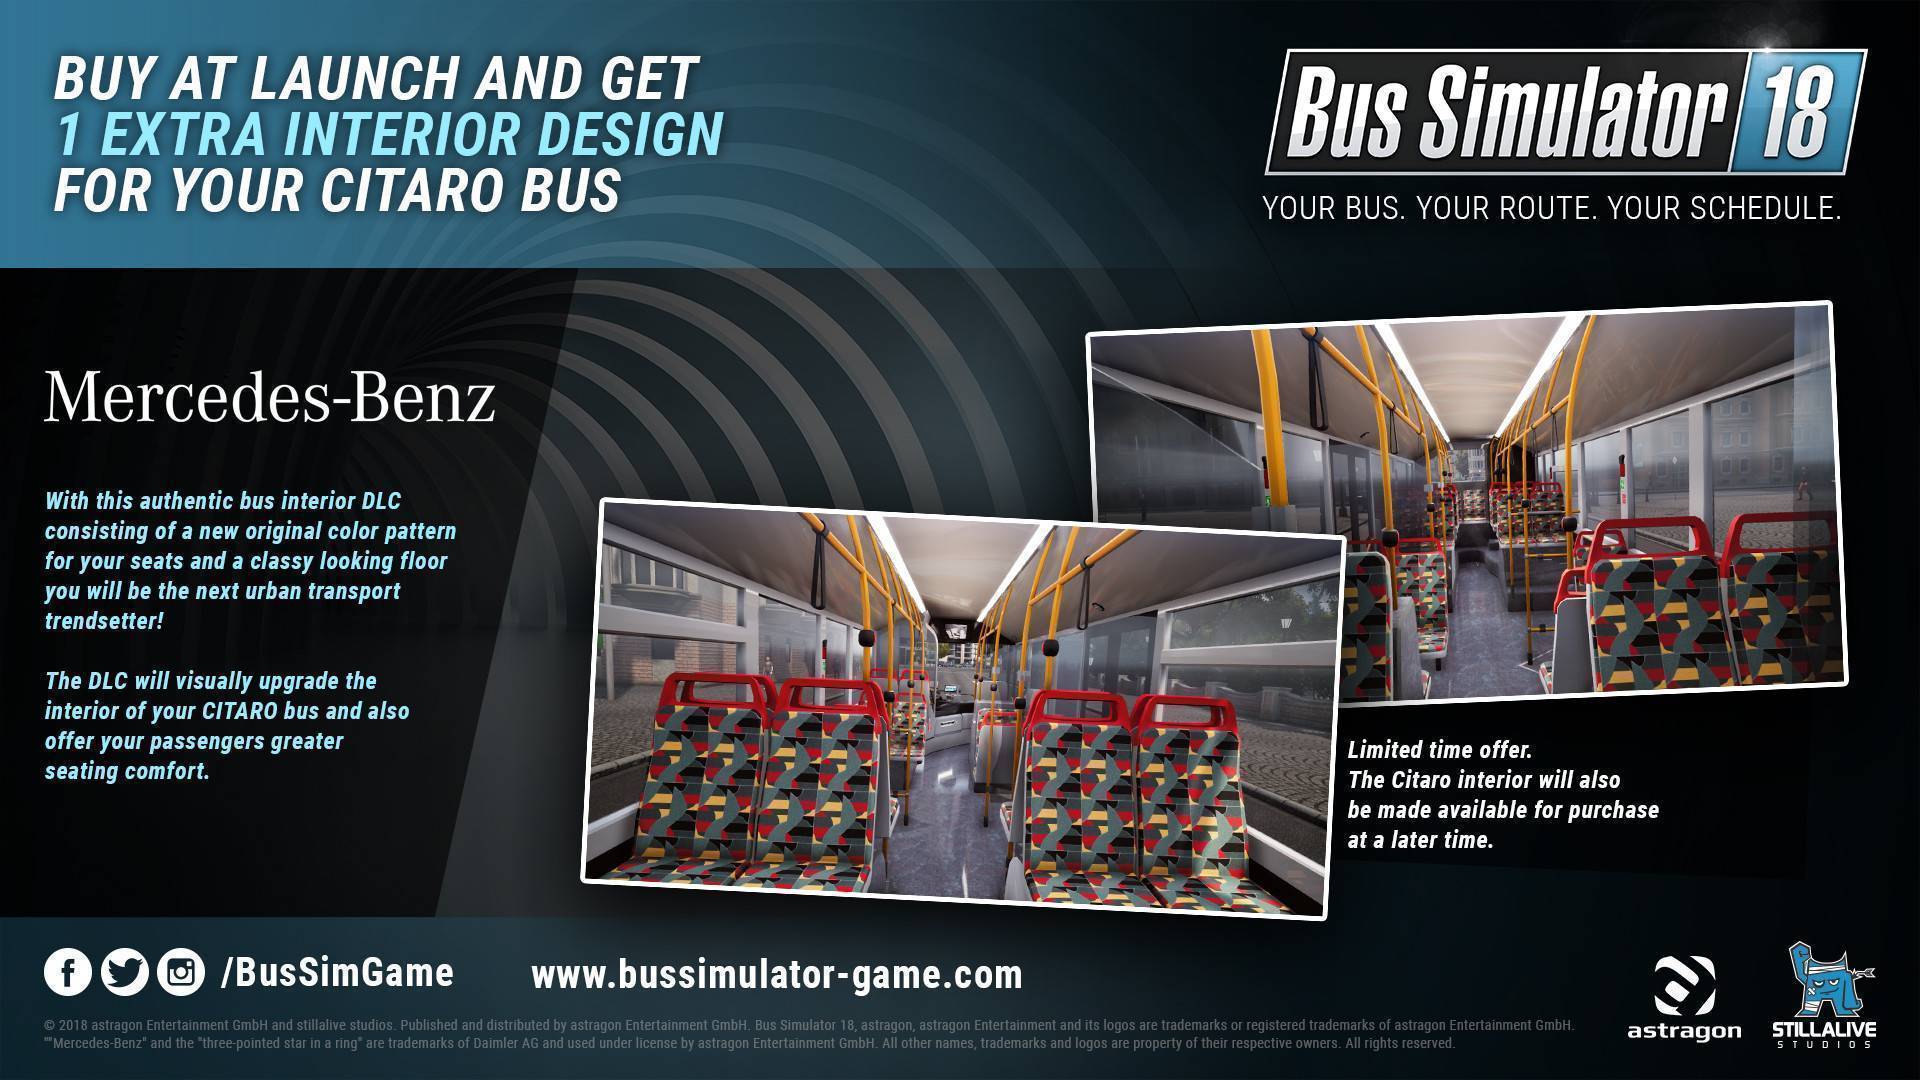 bus simulator 18 activation key